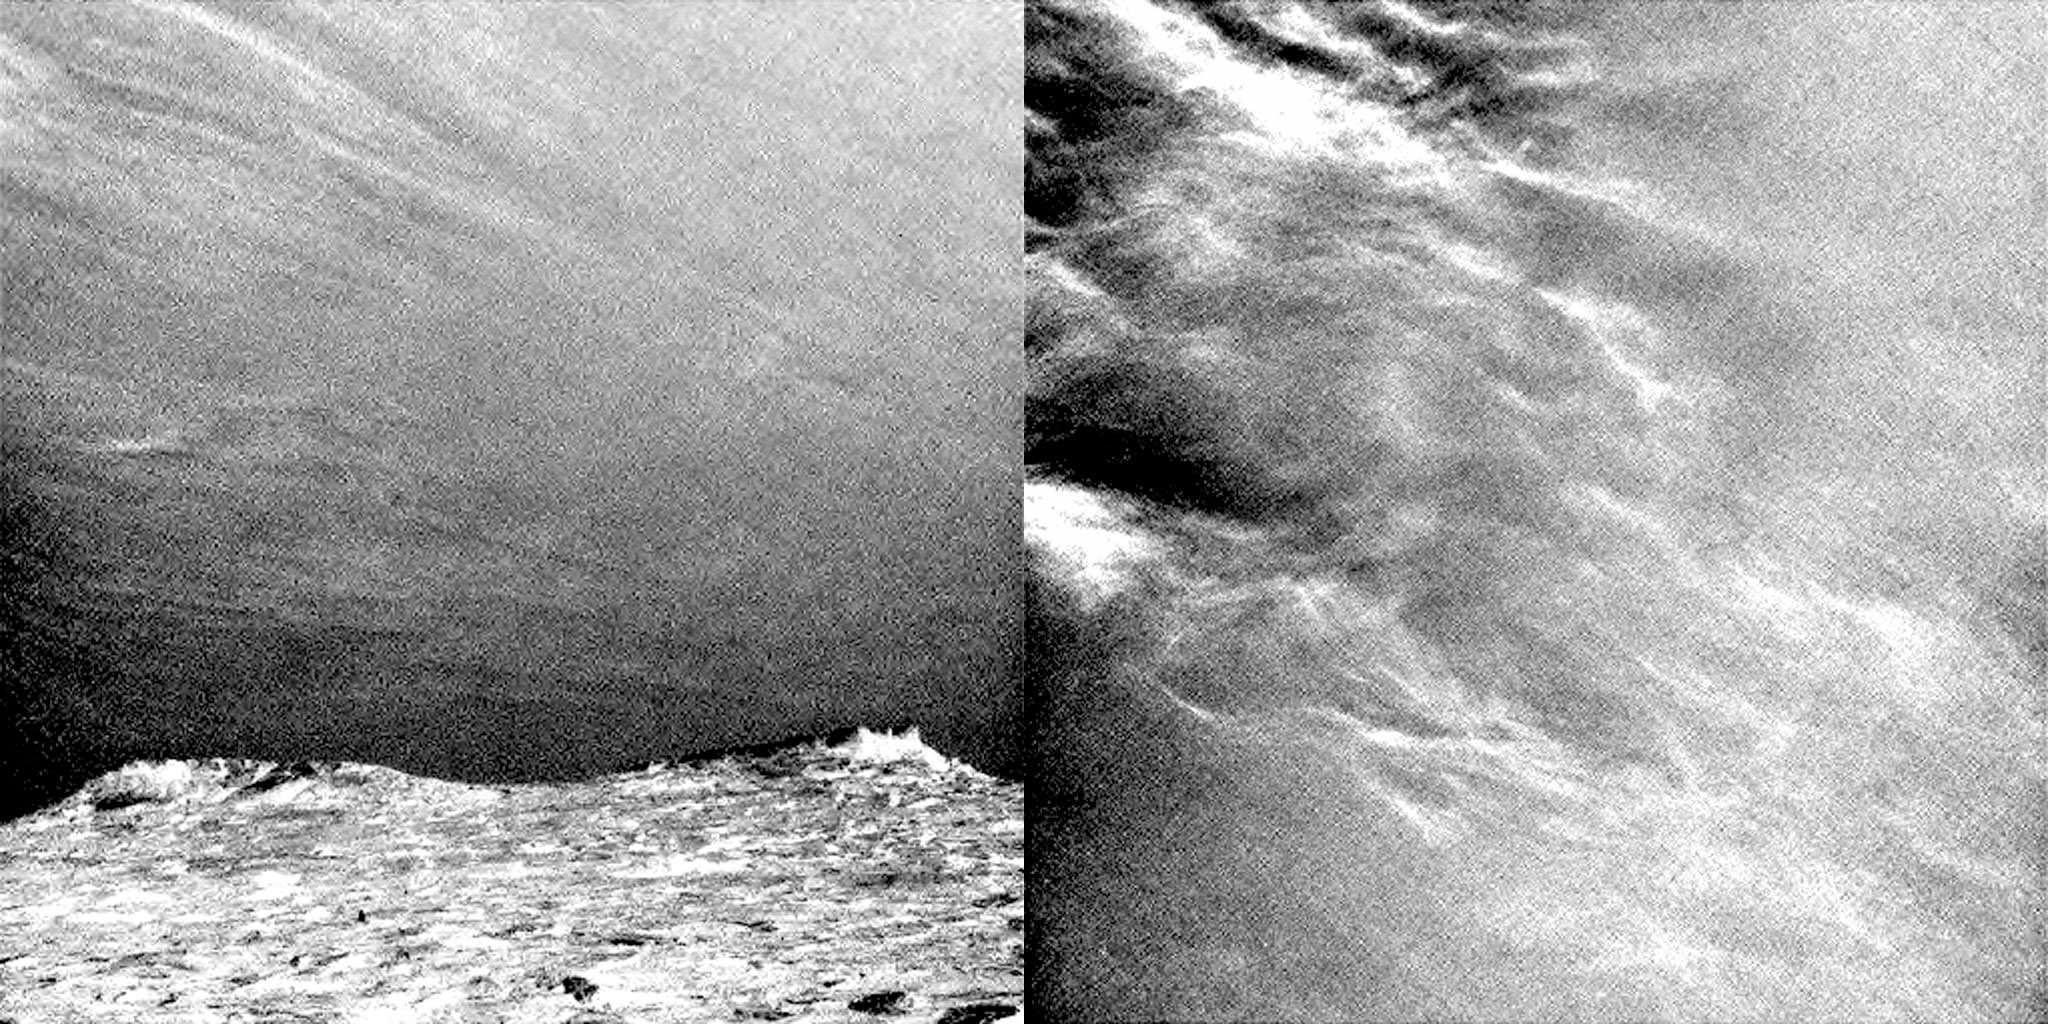  clouds mars curiosity nasa rover 